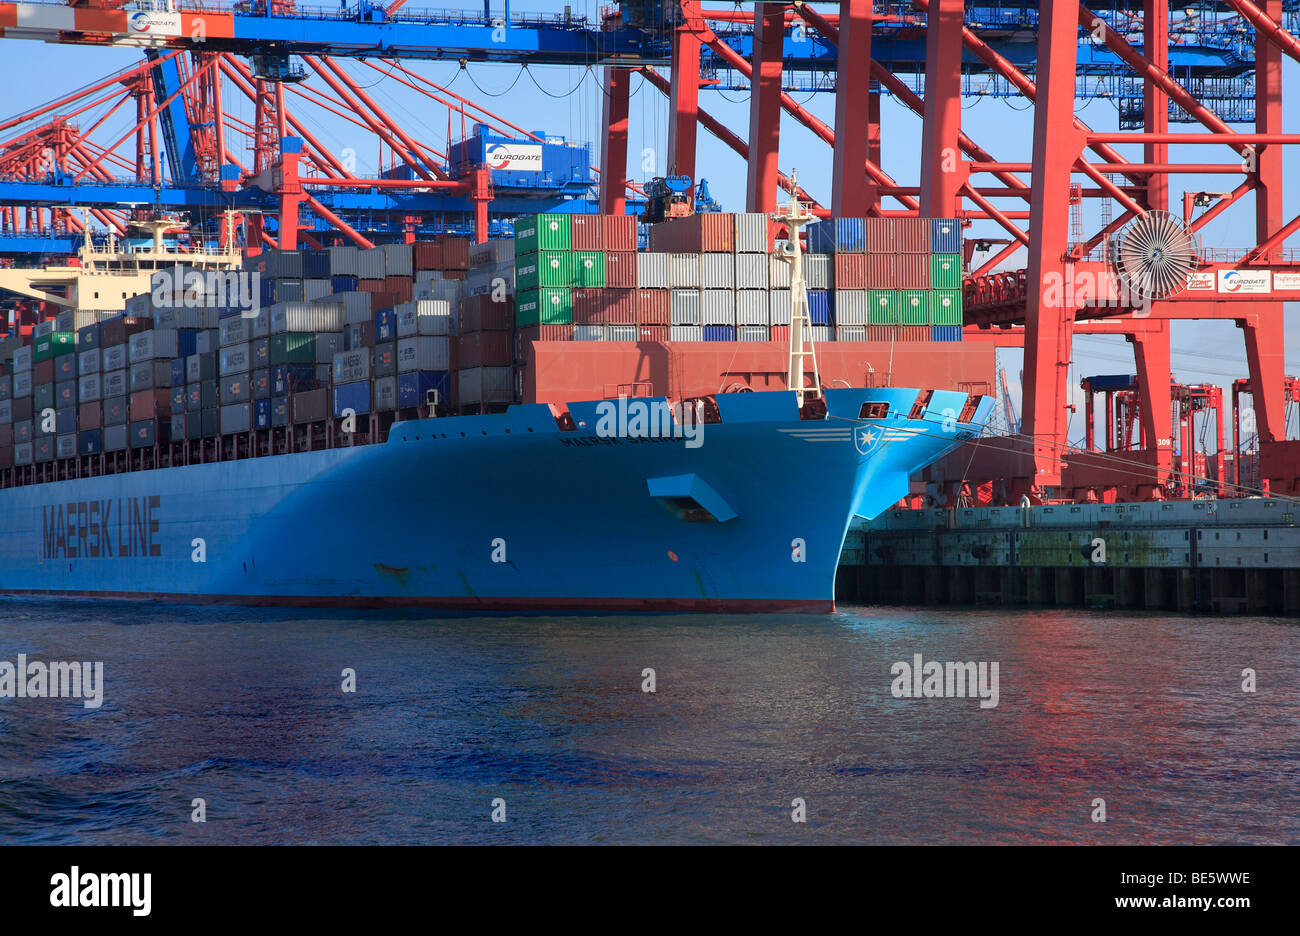 Großes Containerschiff Maersk Line, Maersk Salina, geladen, Eurogate Container Terminal, Containerbrücken, Container, Hafen Stockfoto